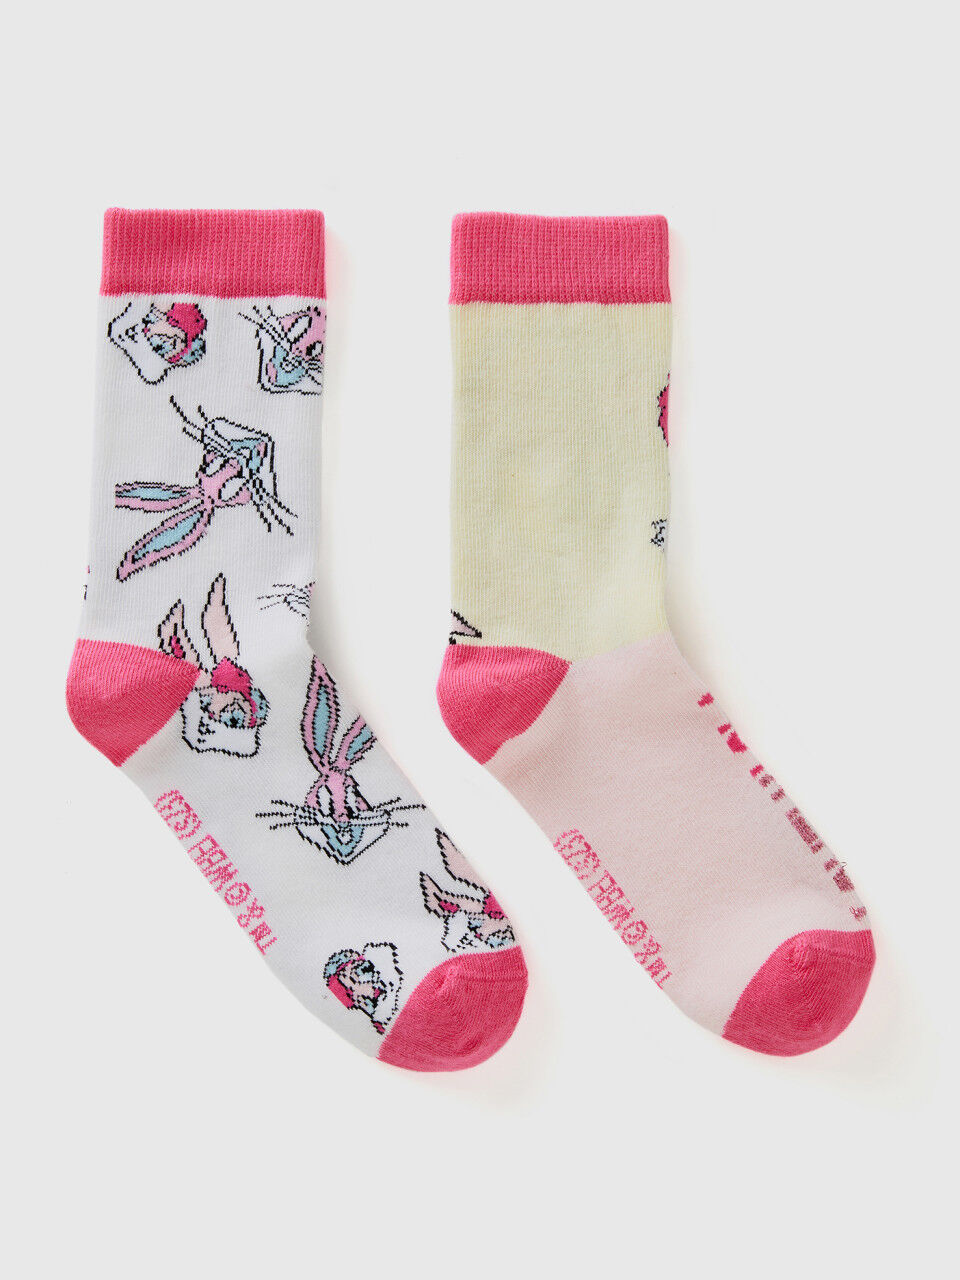 Bugs Bunny & Lola socks